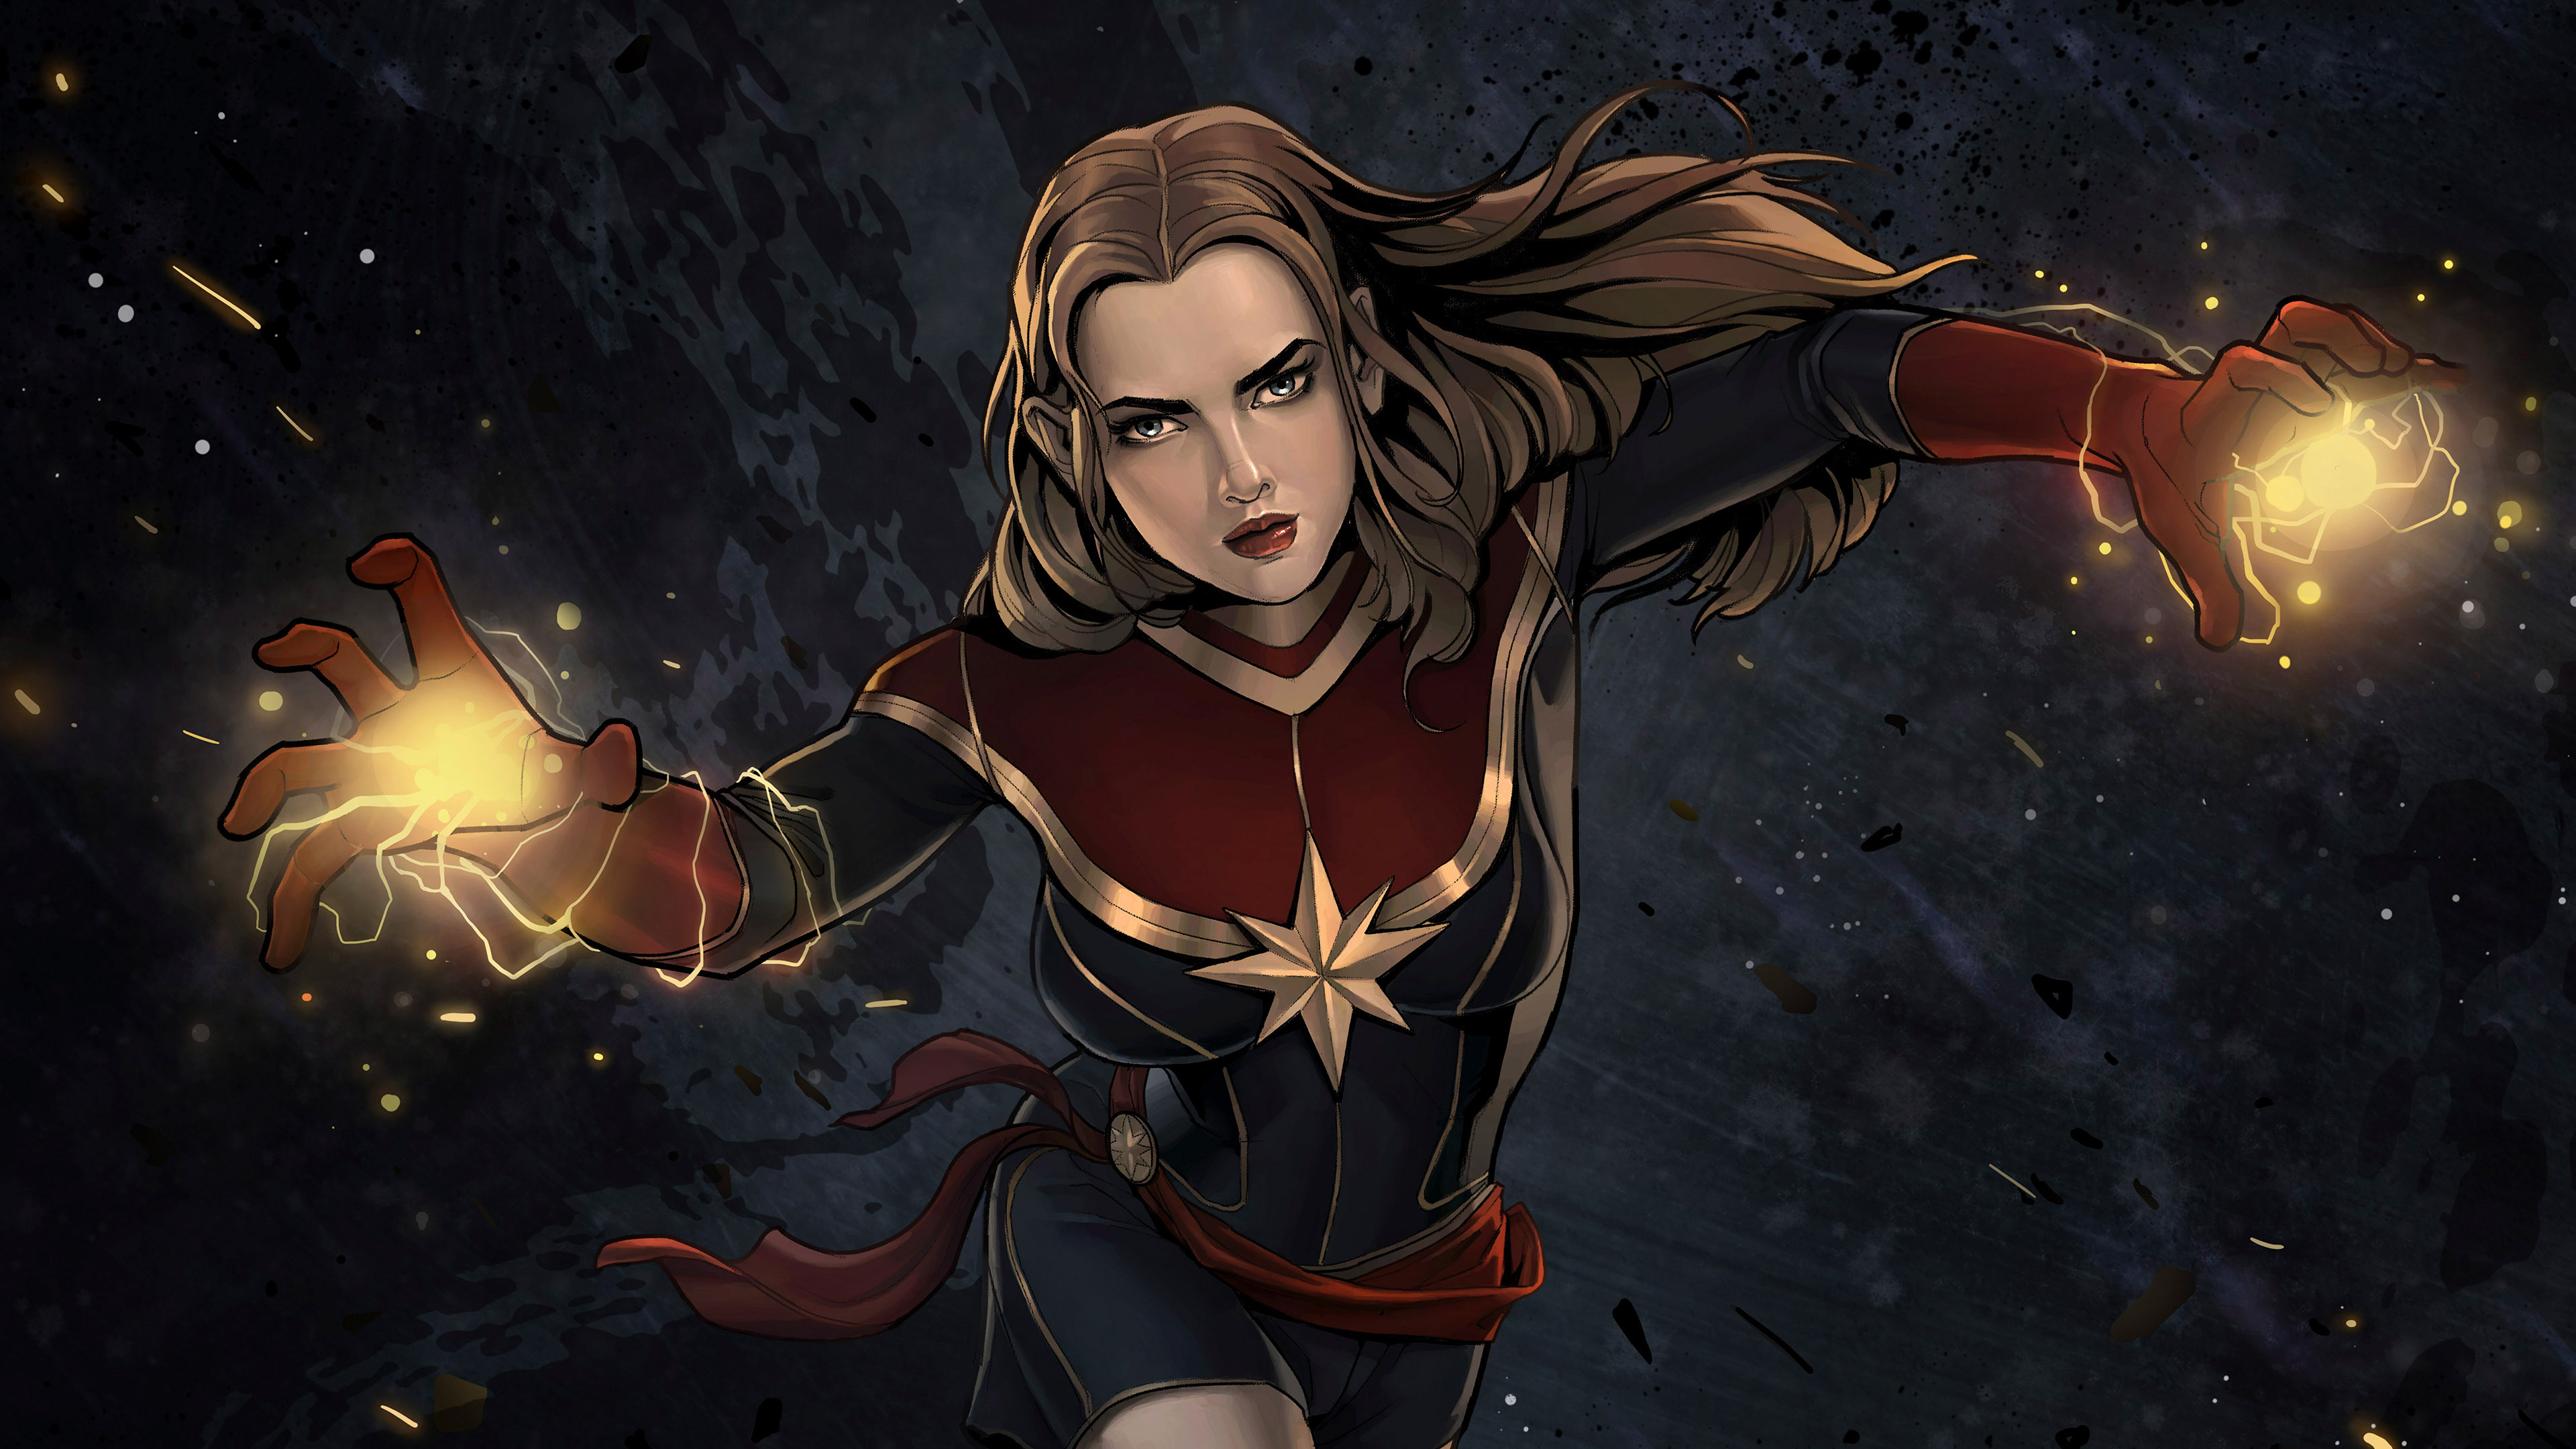 Captain Marvel Comic Artwork 4k superheroes wallpapers, hd ...